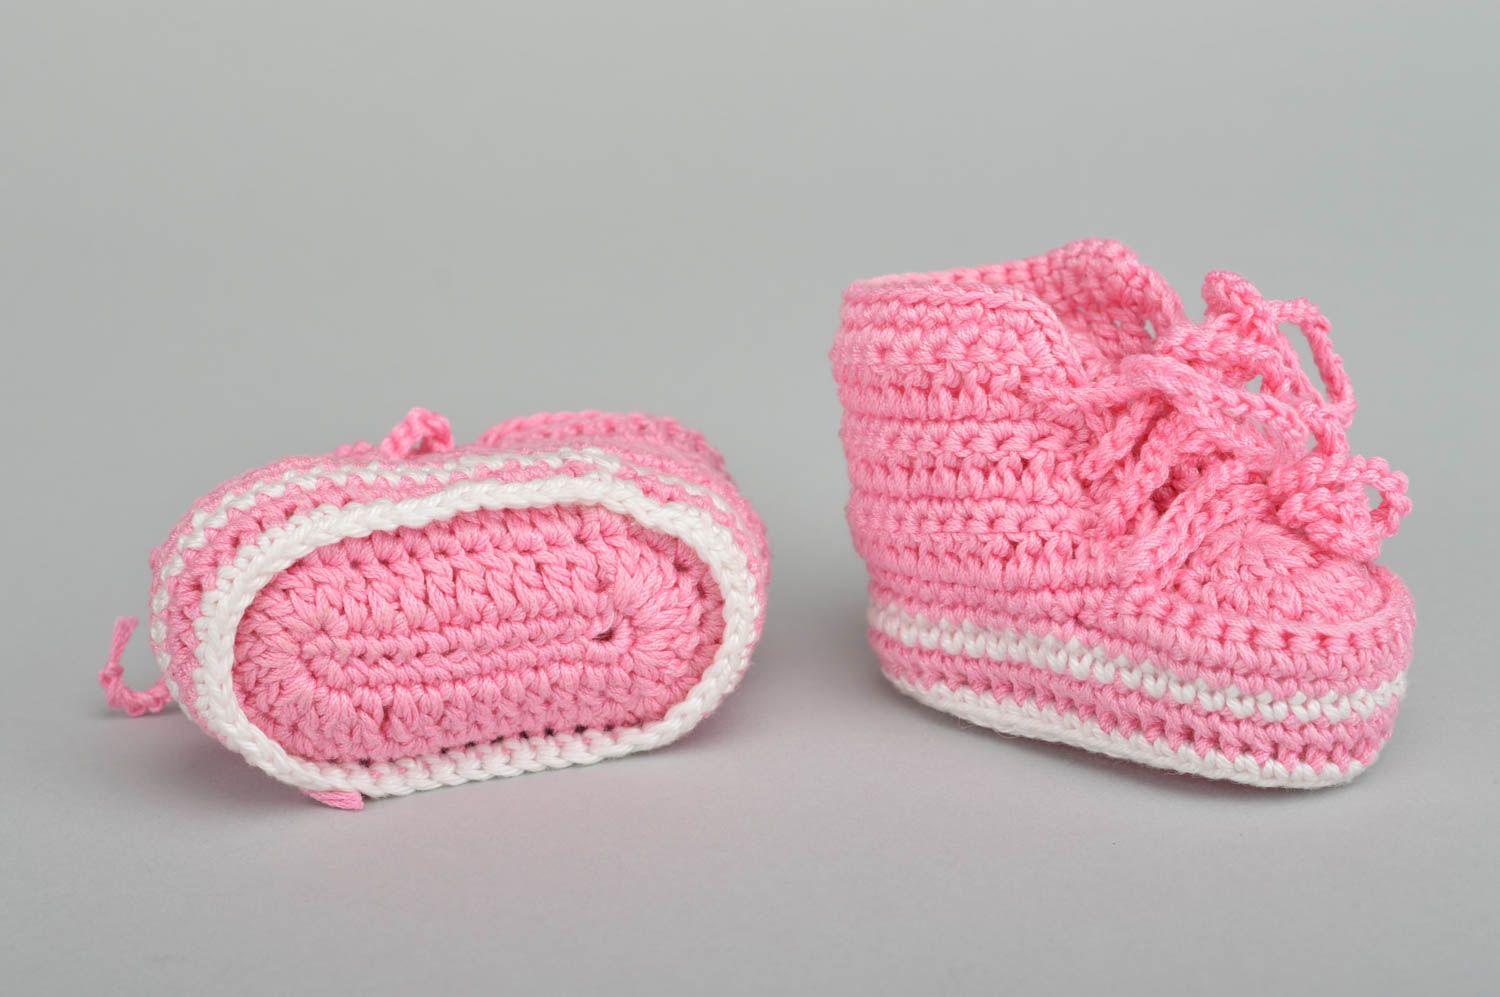 Beautiful handmade baby bootees warm crochet baby booties fashion accessories photo 3